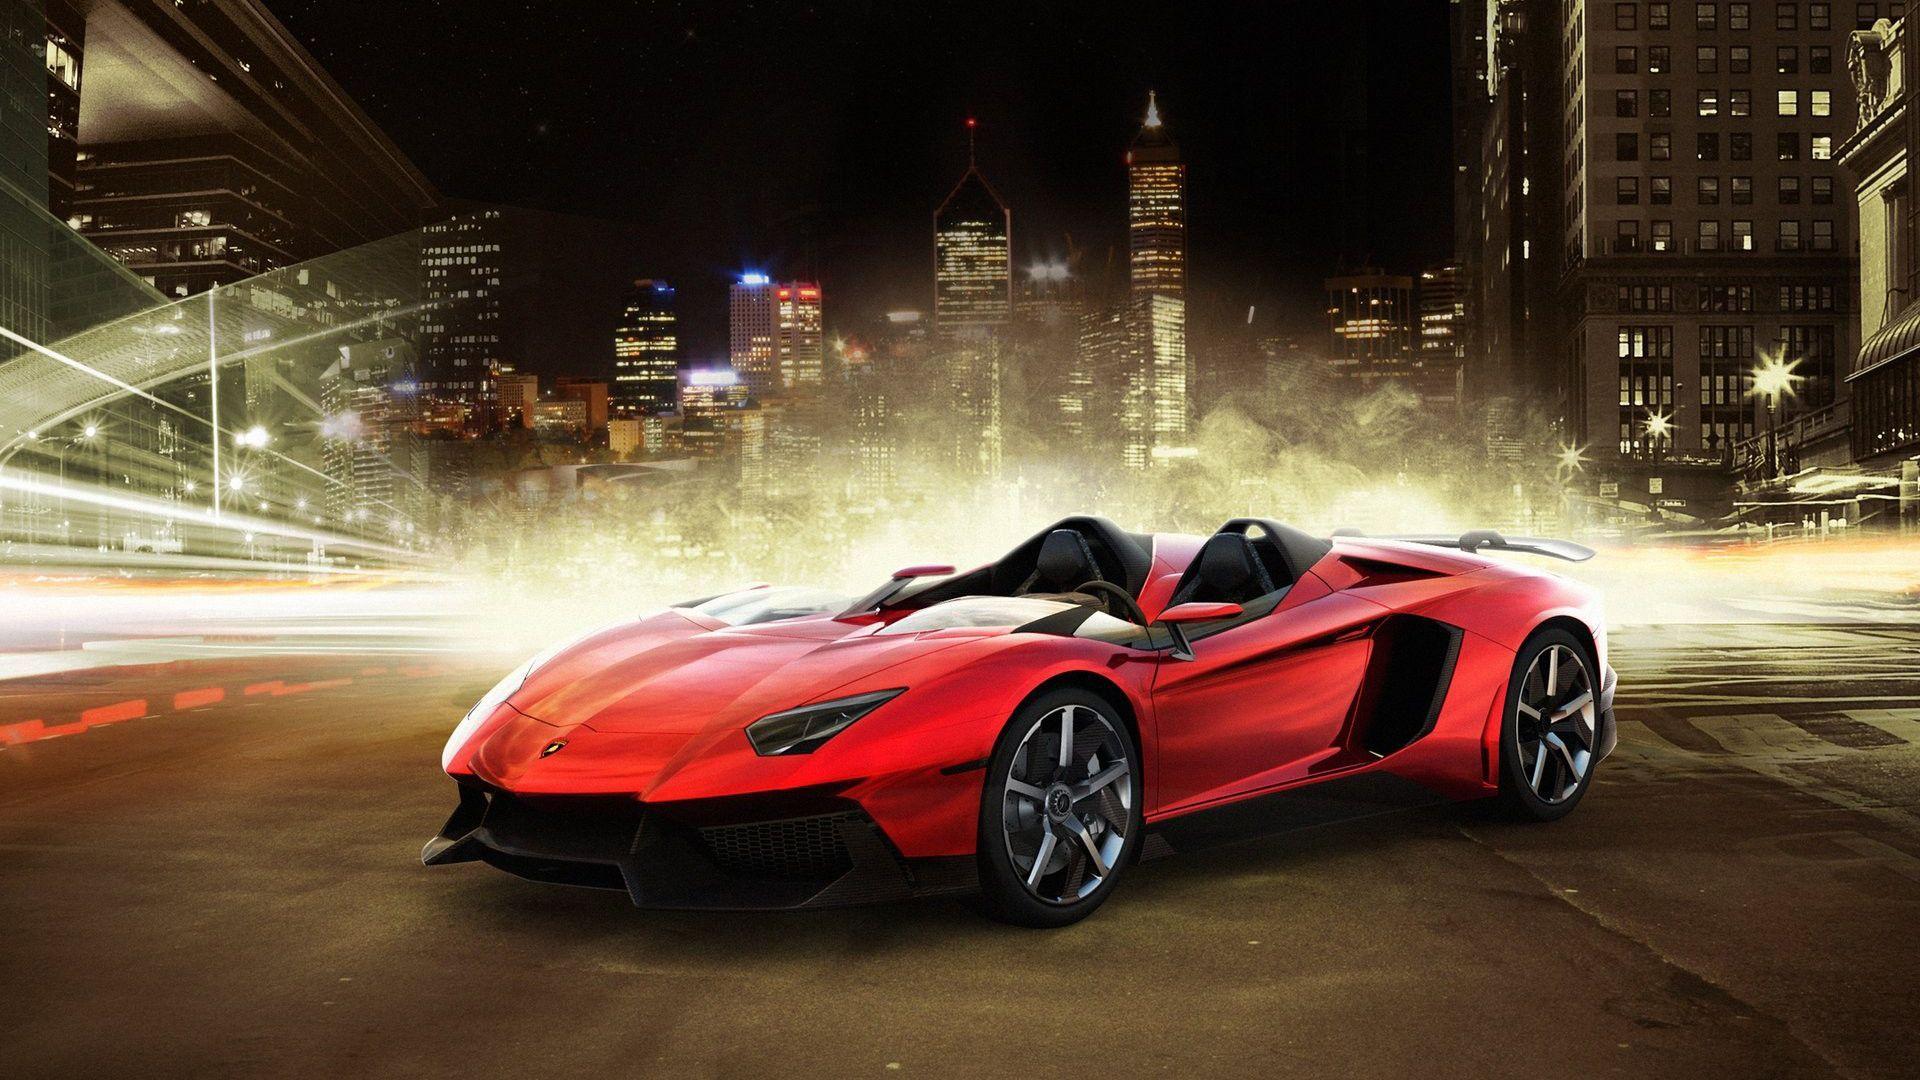 Download Lamborghini Car HD Wallpaper 1080p Collection Free. HD